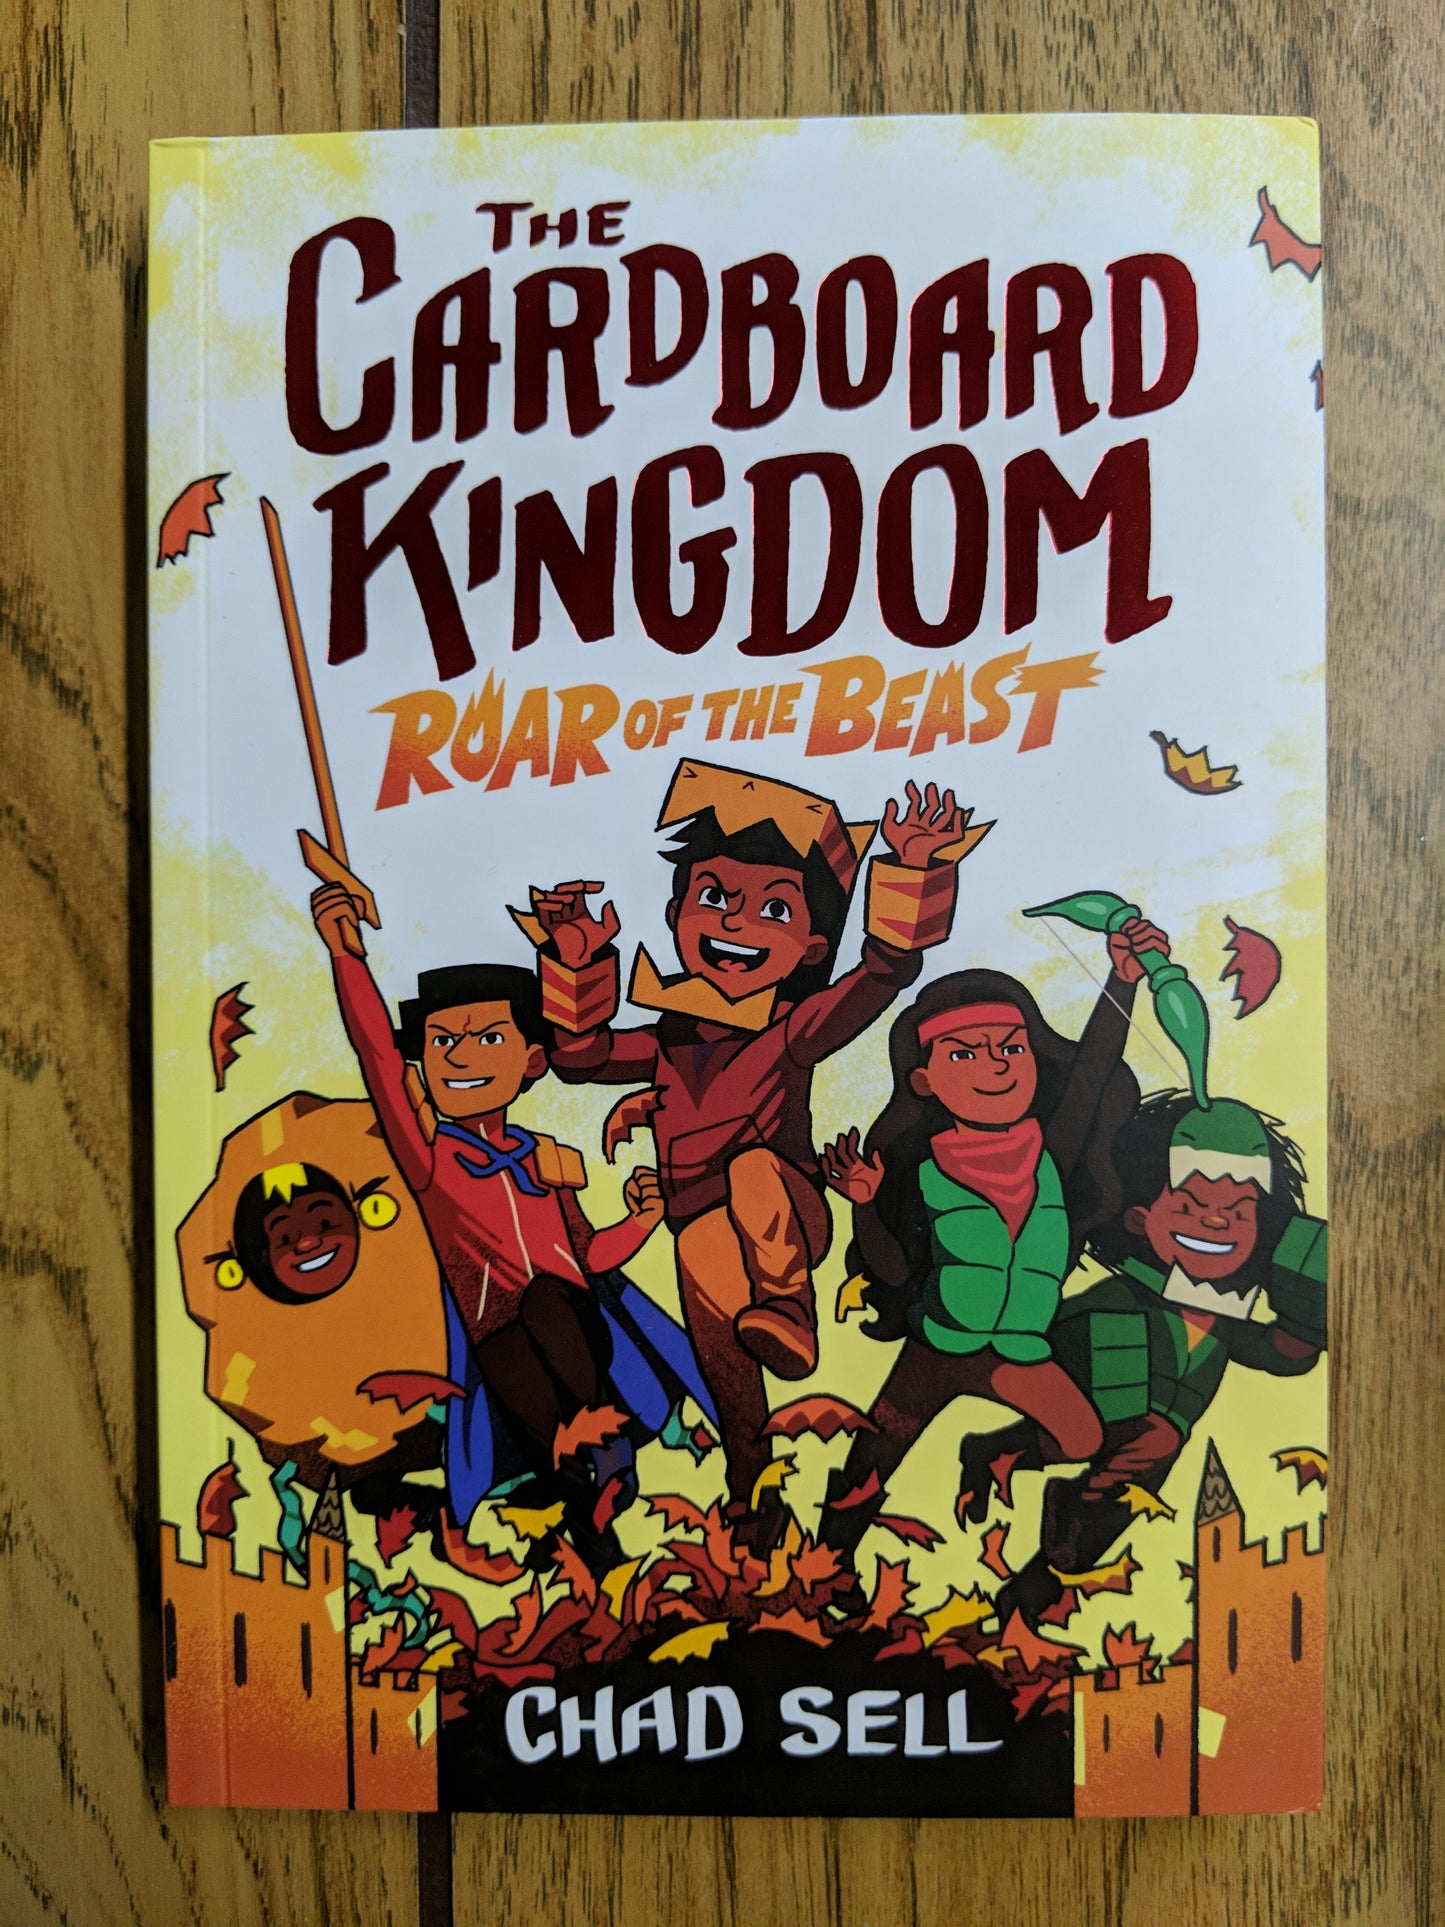 The Cardboard Kingdom: Roar of the Beast (#2)